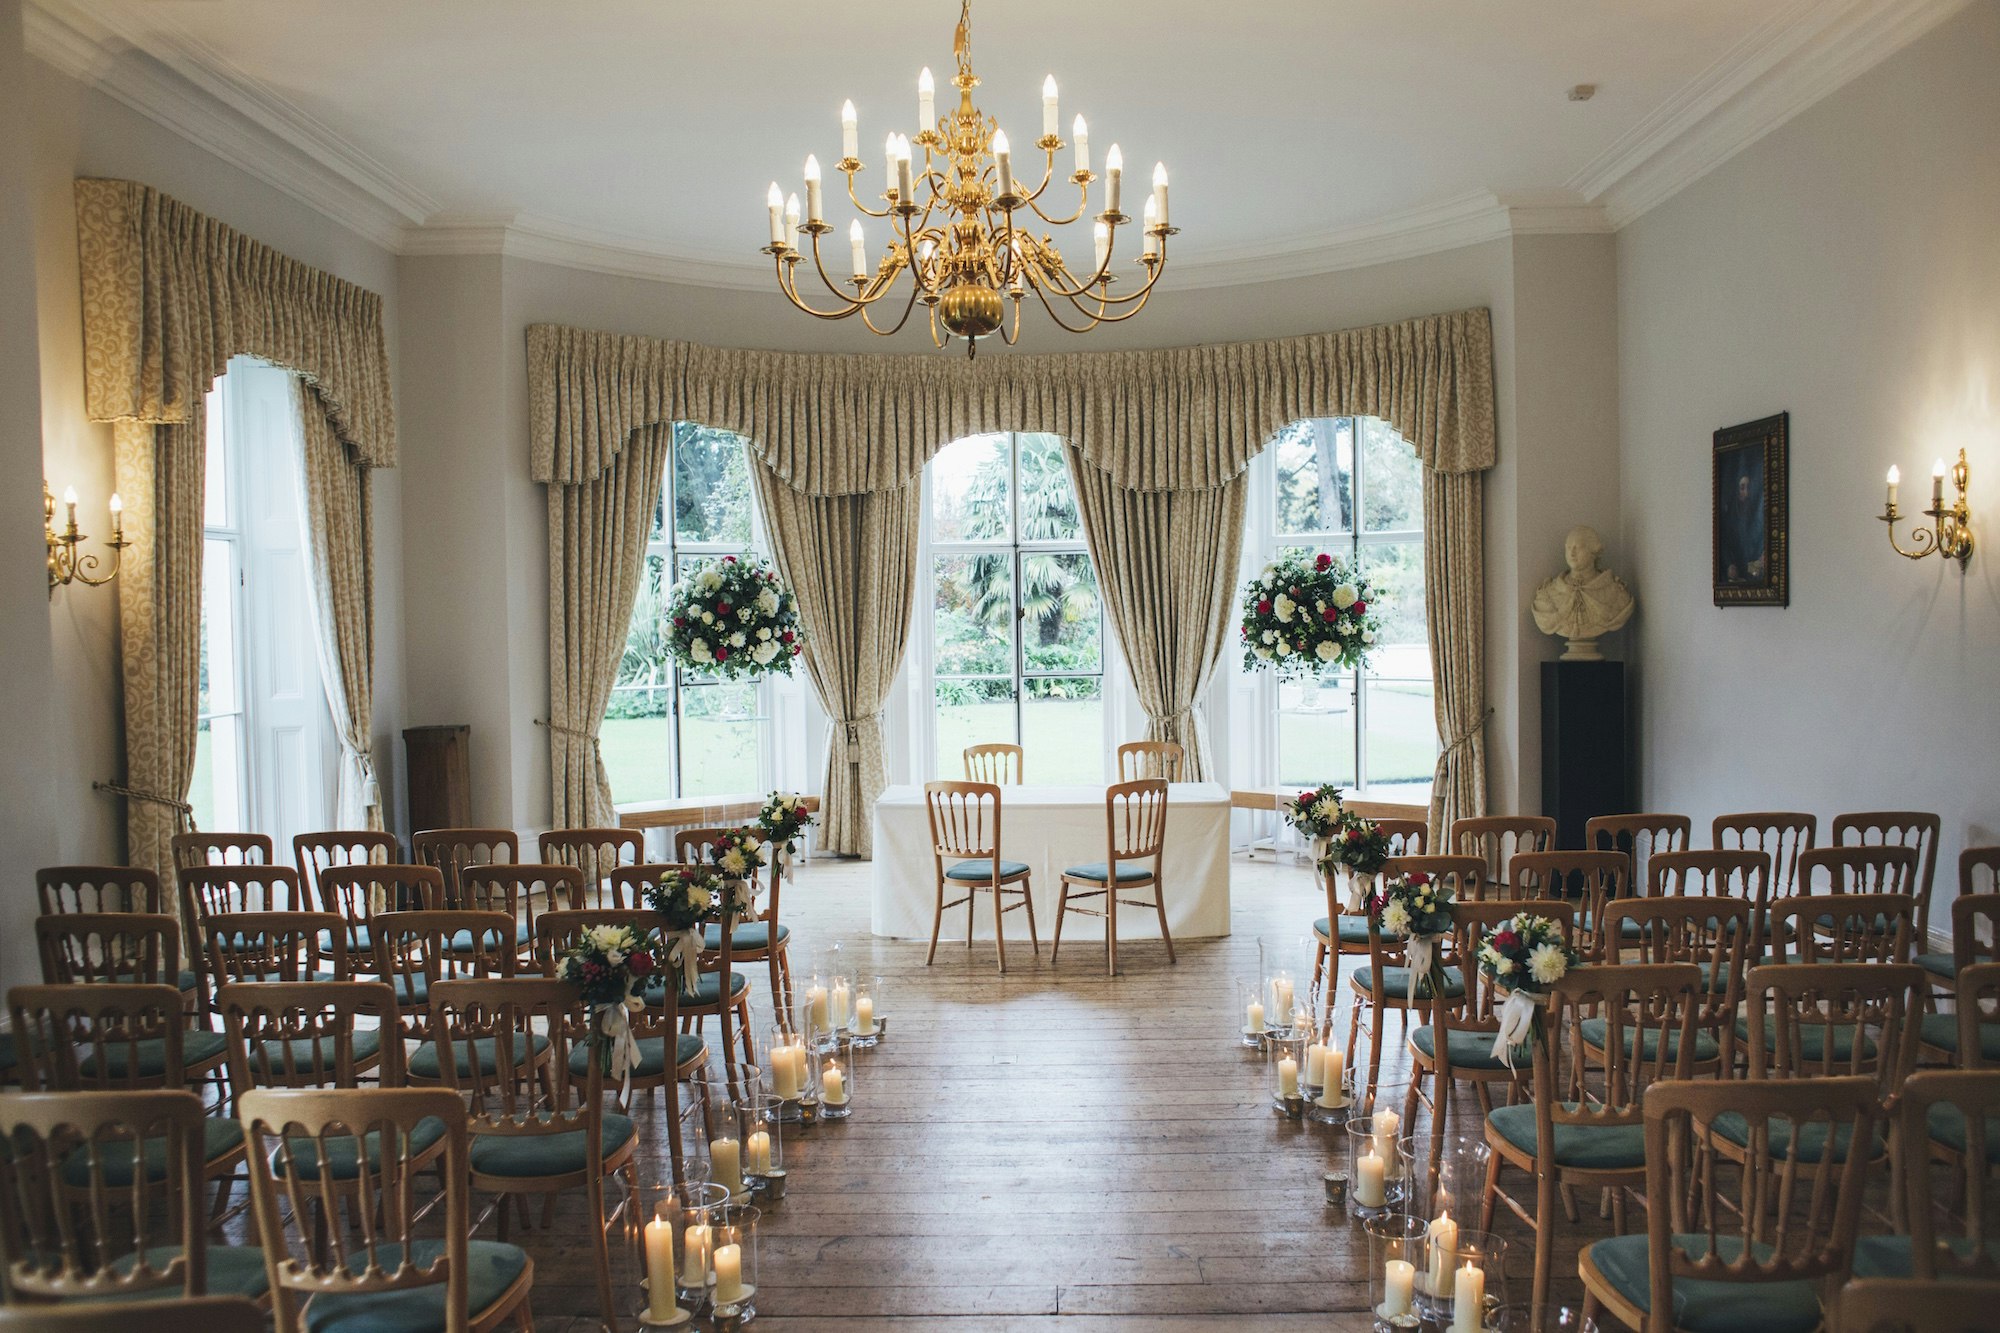 Budget Wedding Venues in London - Kew Gardens